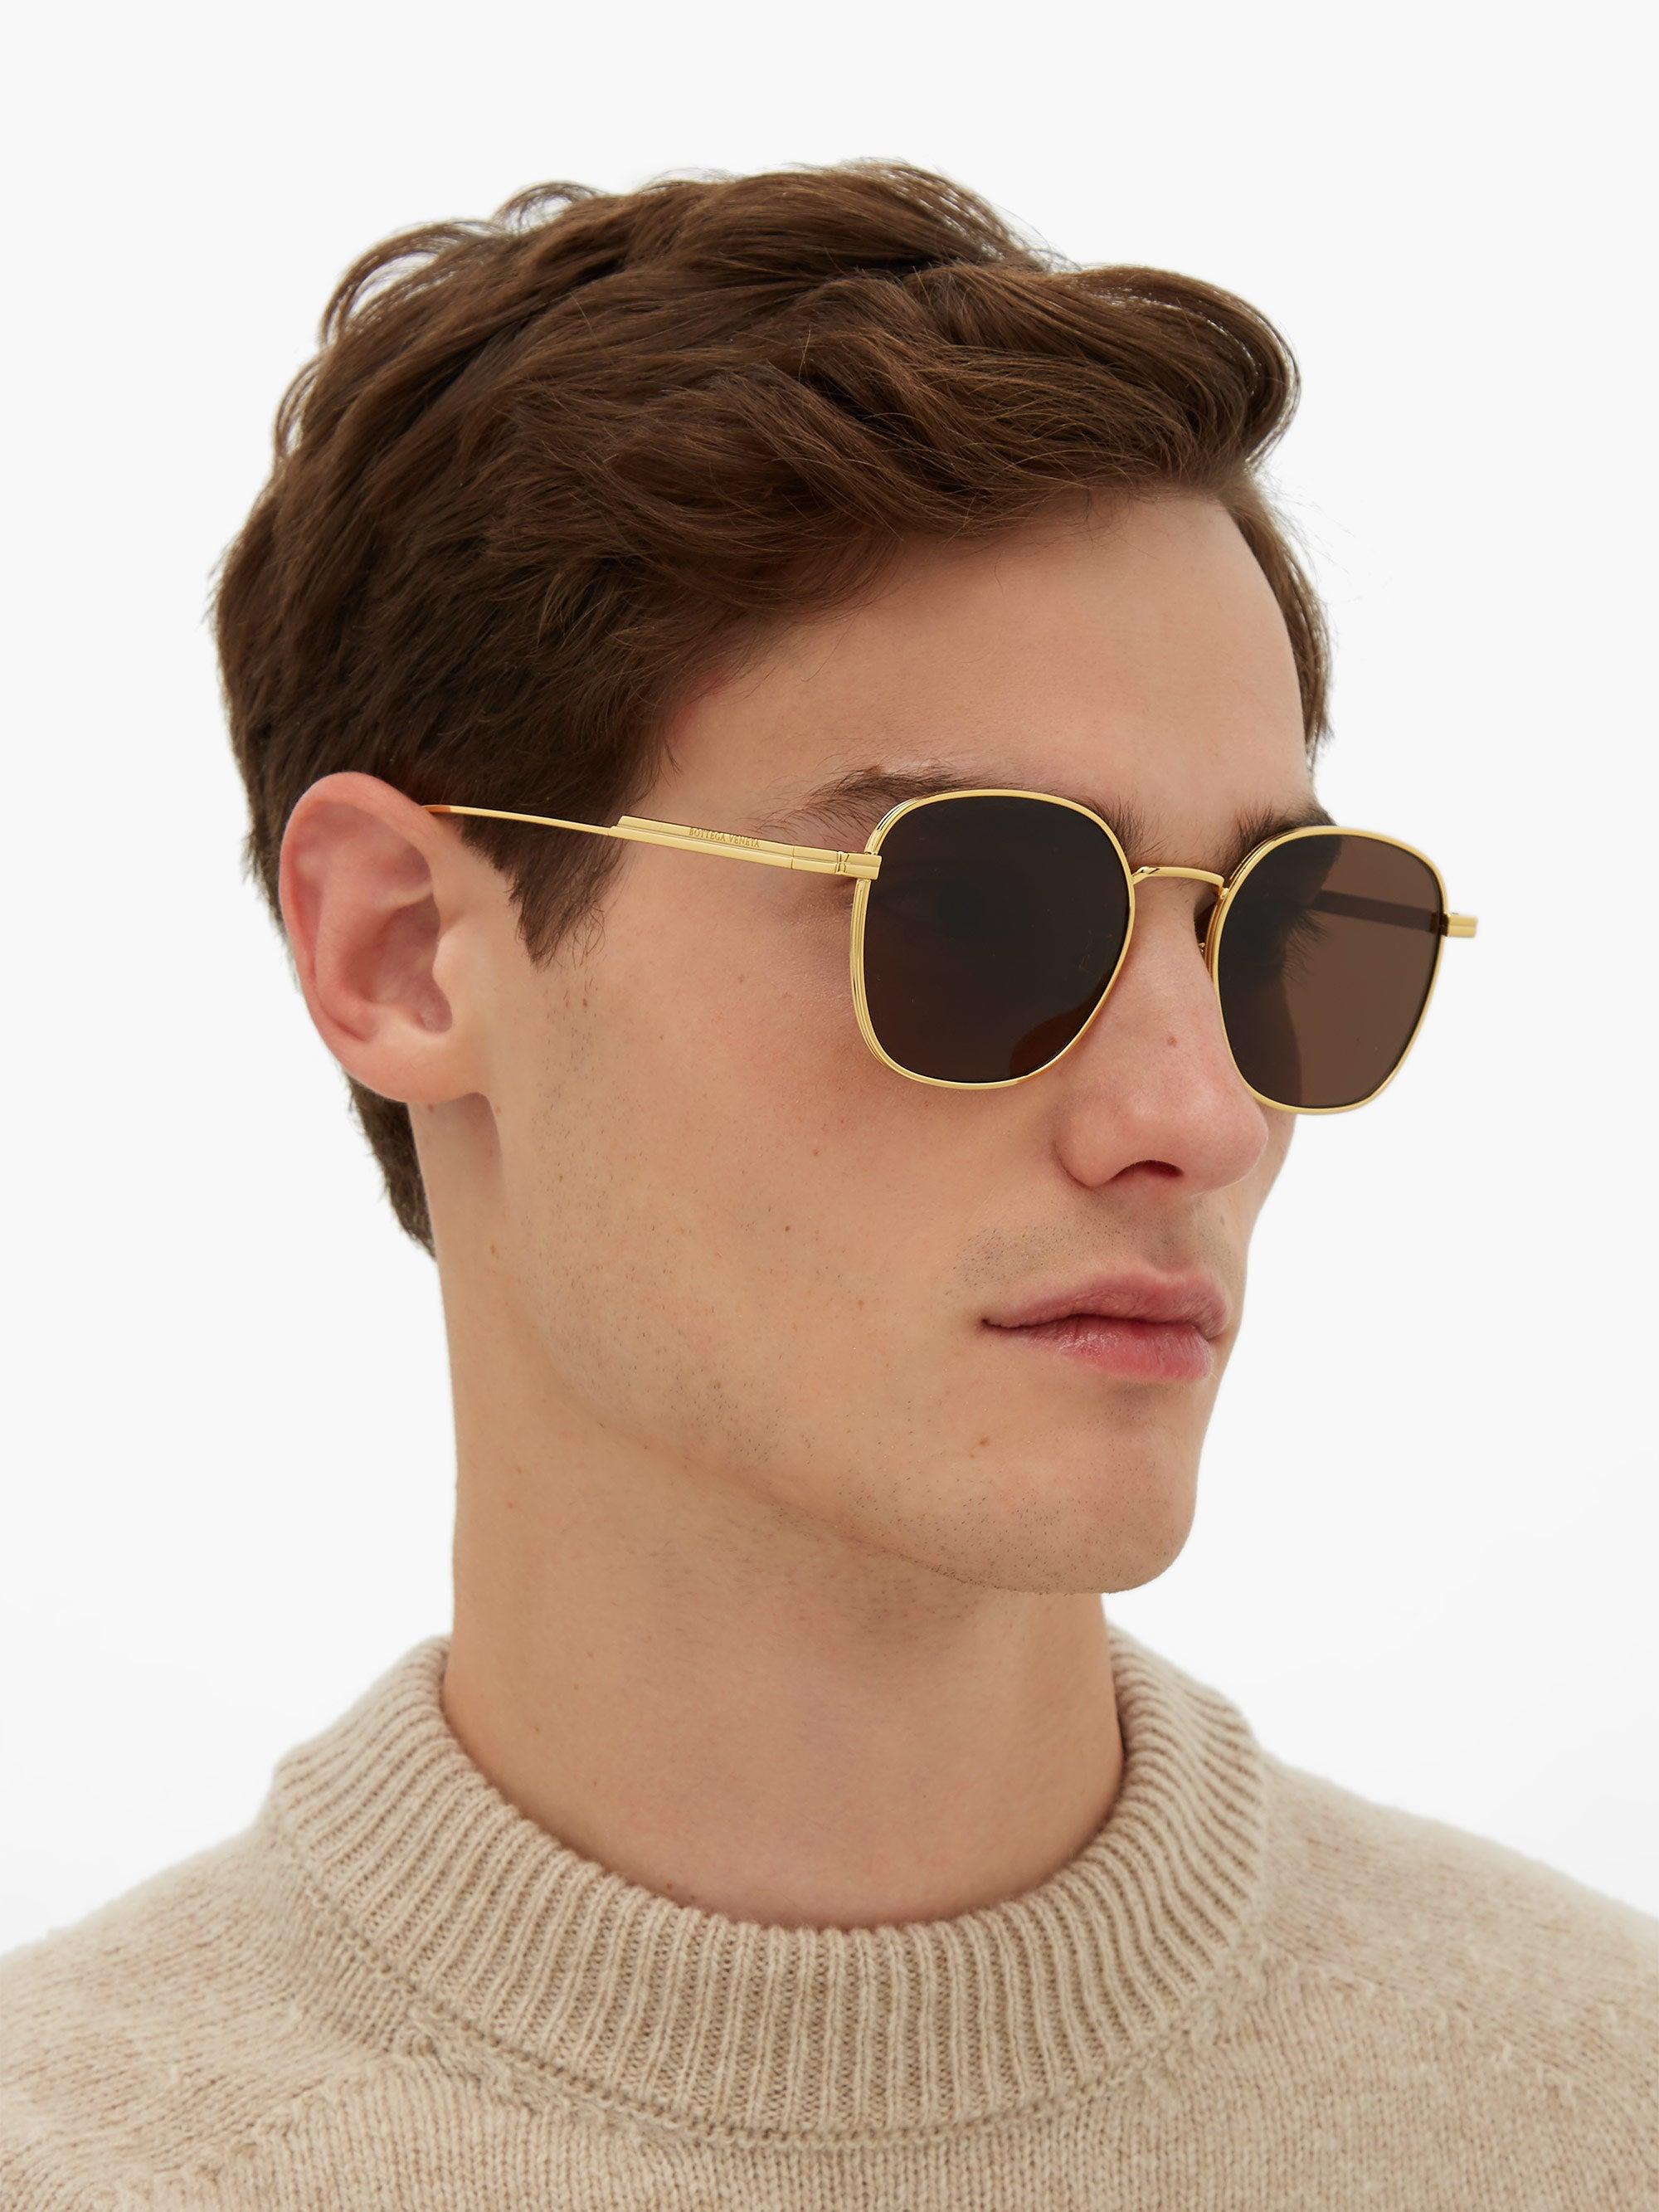 Bottega Veneta Round Metal Sunglasses in Gold (Metallic) for Men - Lyst